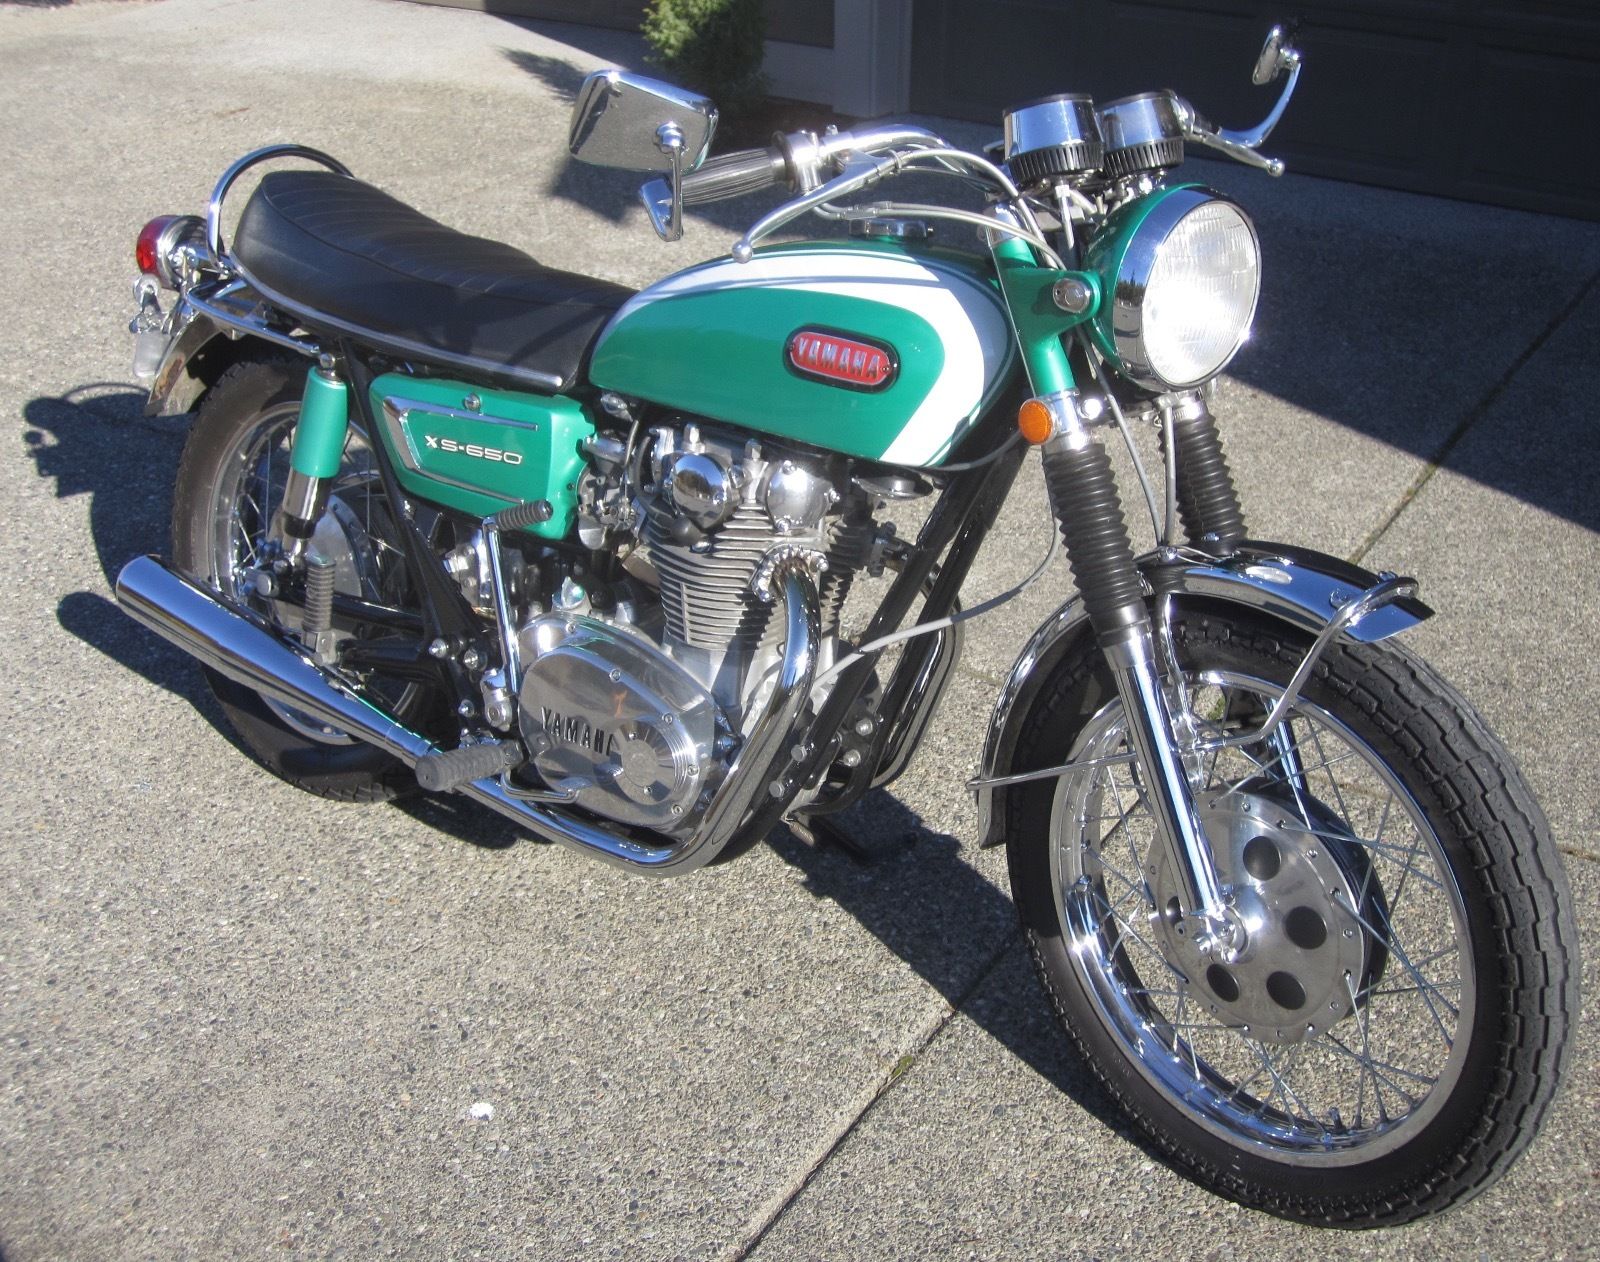 Yamaha XS1 650 - 1970